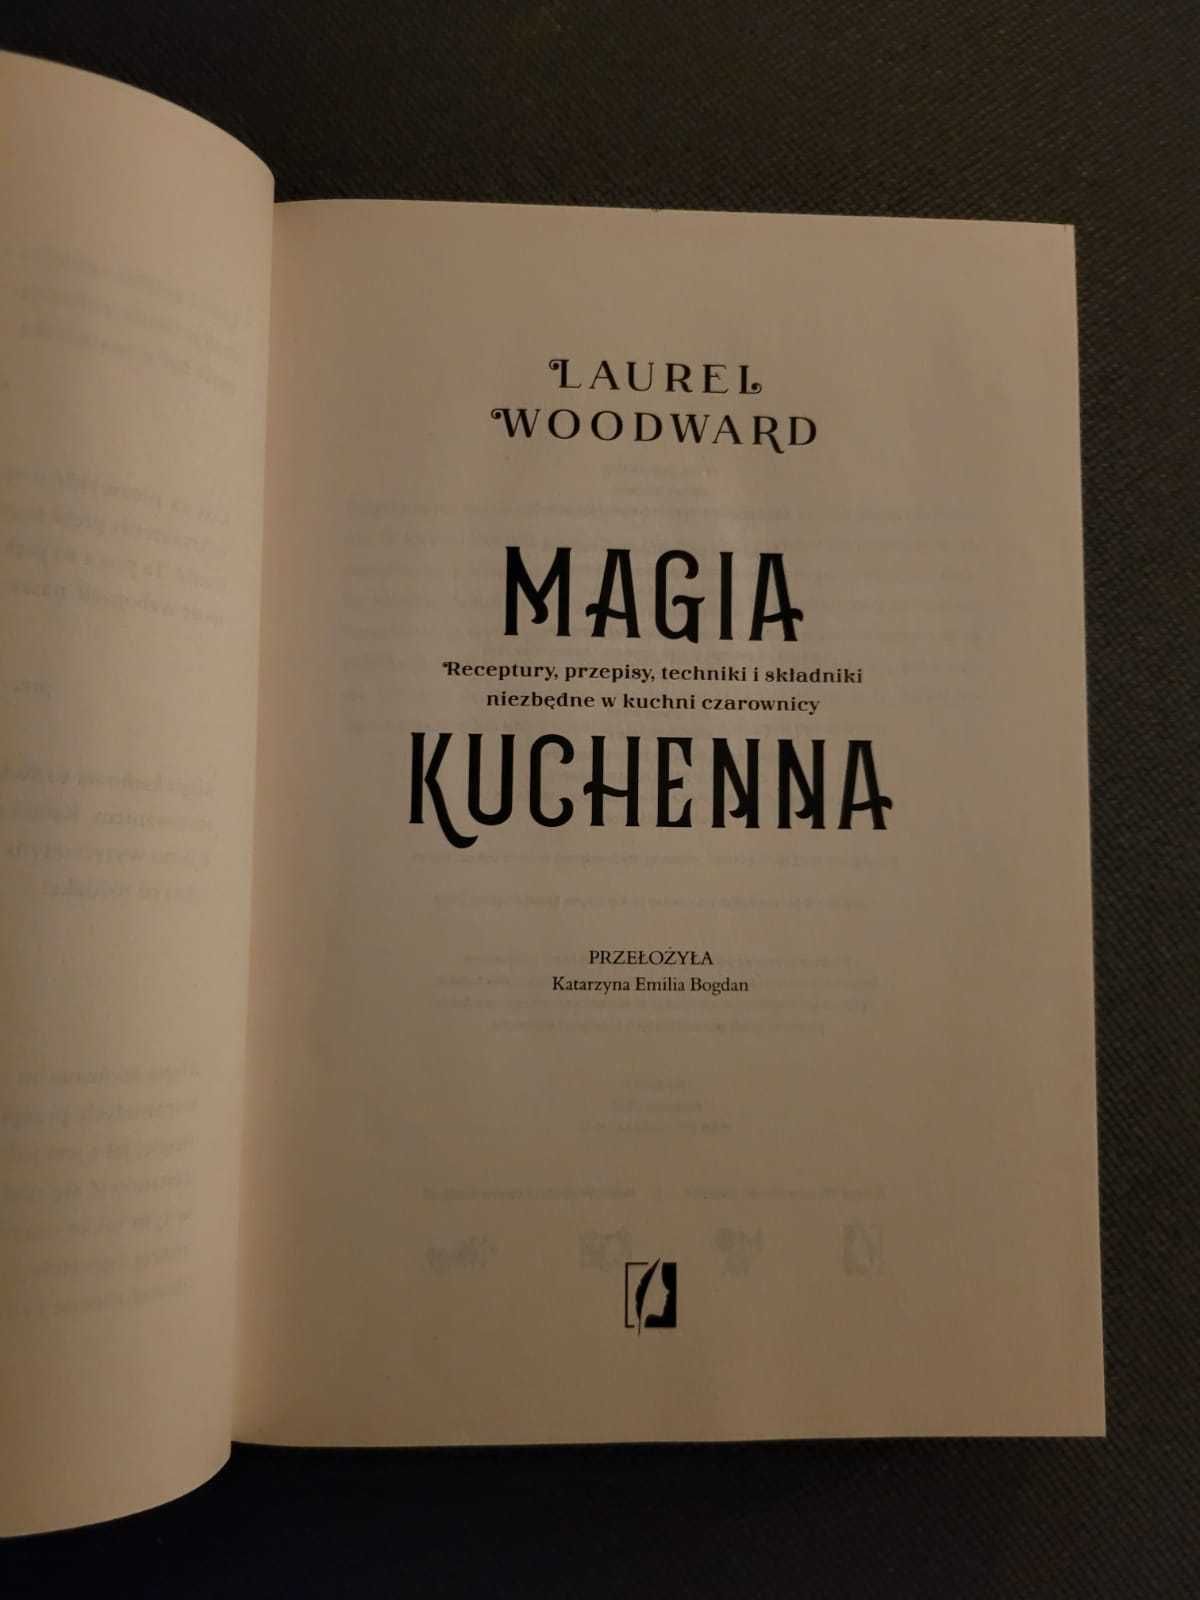 Książka "Magia kuchenna"